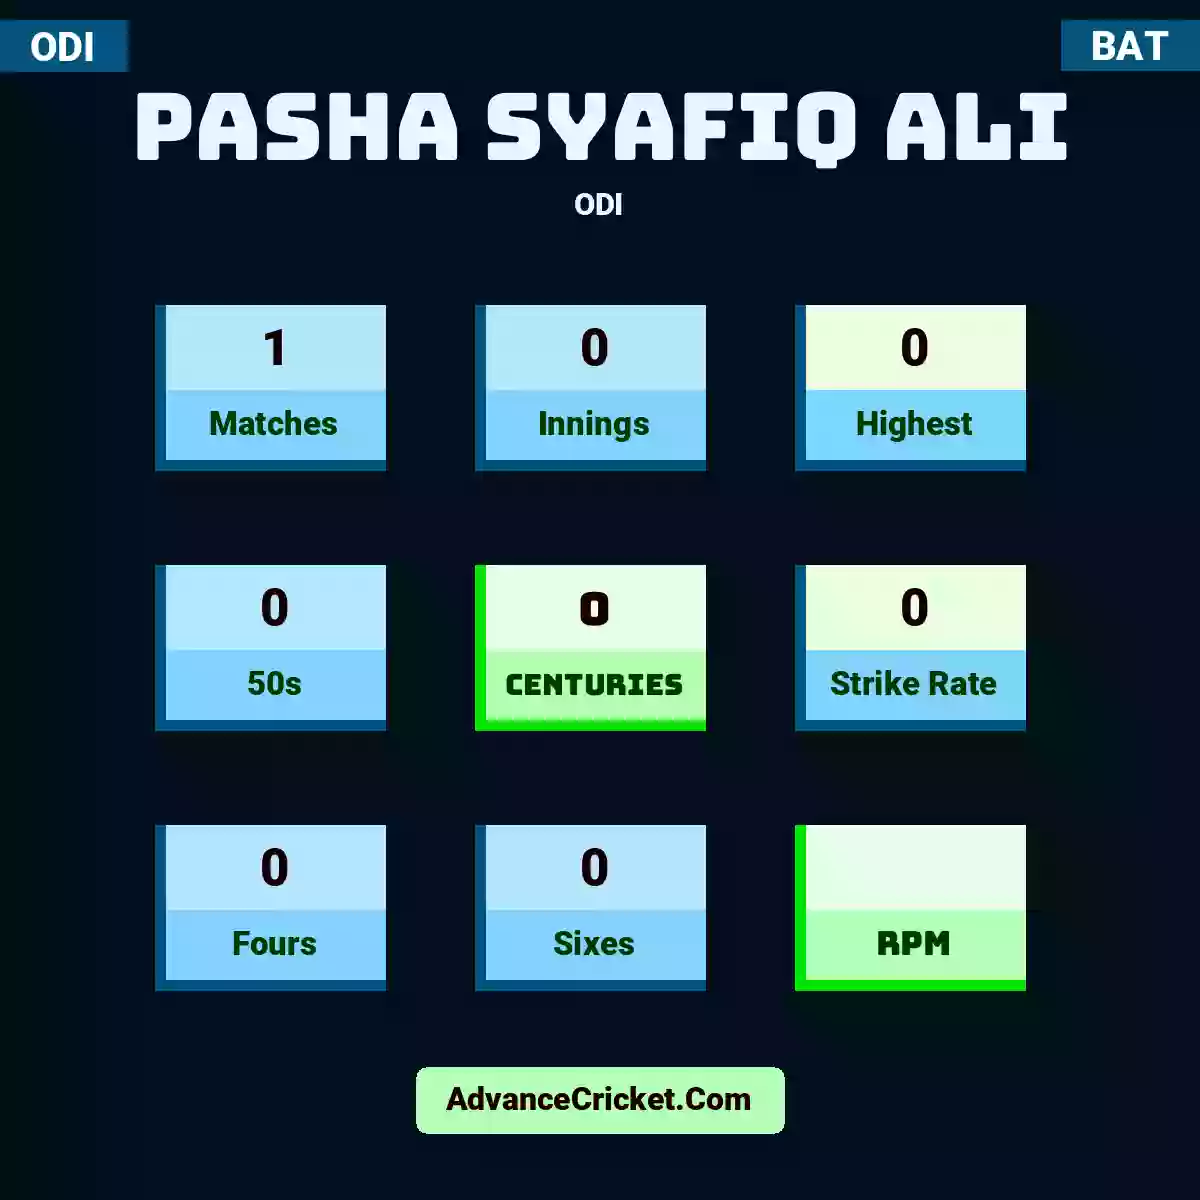 Pasha Syafiq Ali ODI , Pasha Syafiq Ali played 1 matches, scored 0 runs as highest, 0 half-centuries, and 0 centuries, with a strike rate of 0. P.Ali hit 0 fours and 0 sixes.